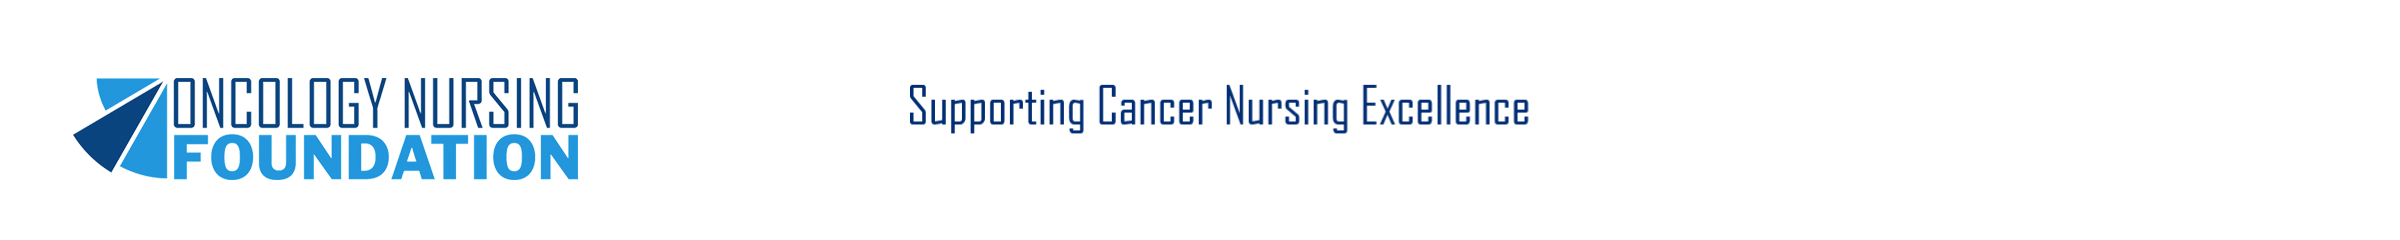 Oncology Nursing Foundation logo